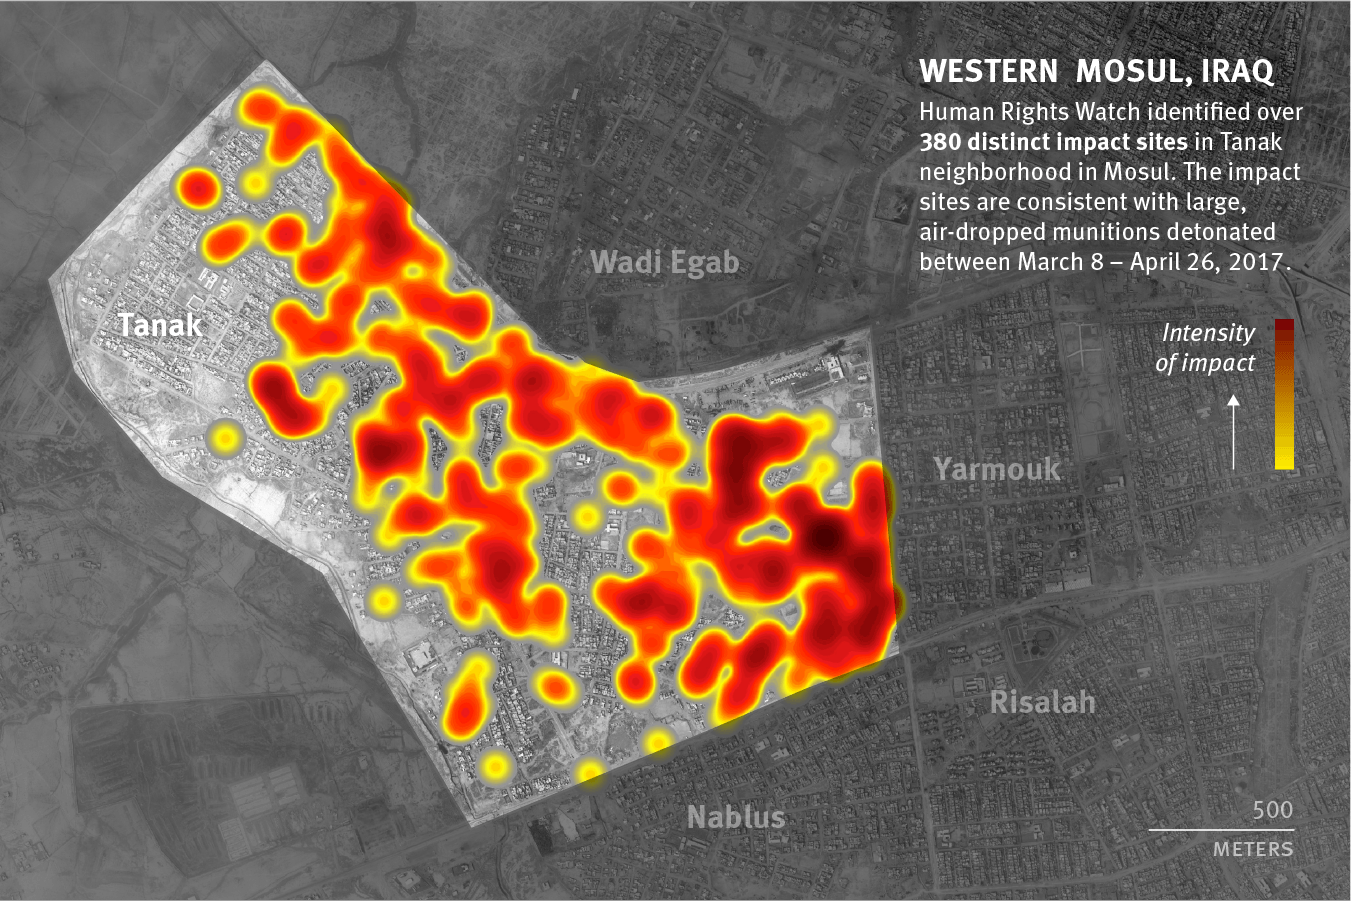 Human Rights Watch identified over 380 distinct impact sites in Tanak neighborhood in Mosul.